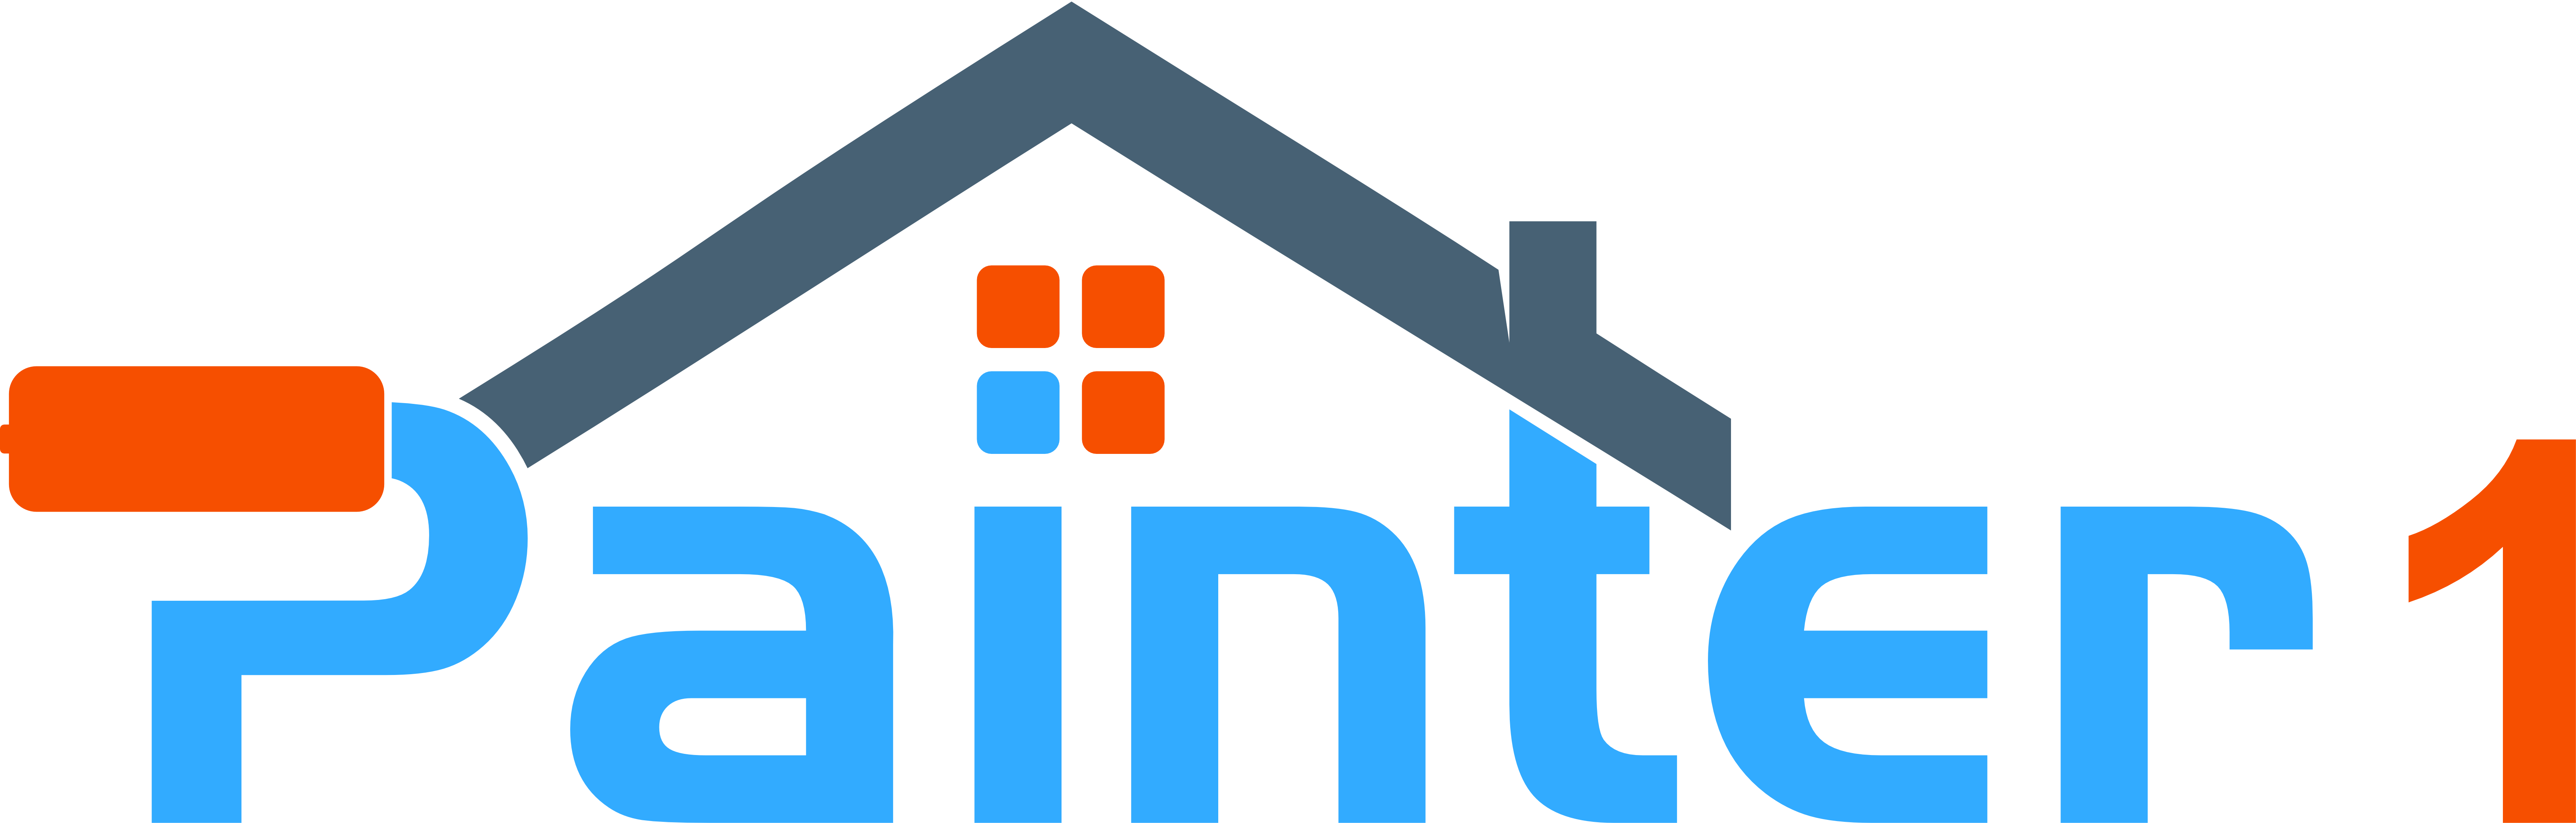 Painter1 of Saint George Logo